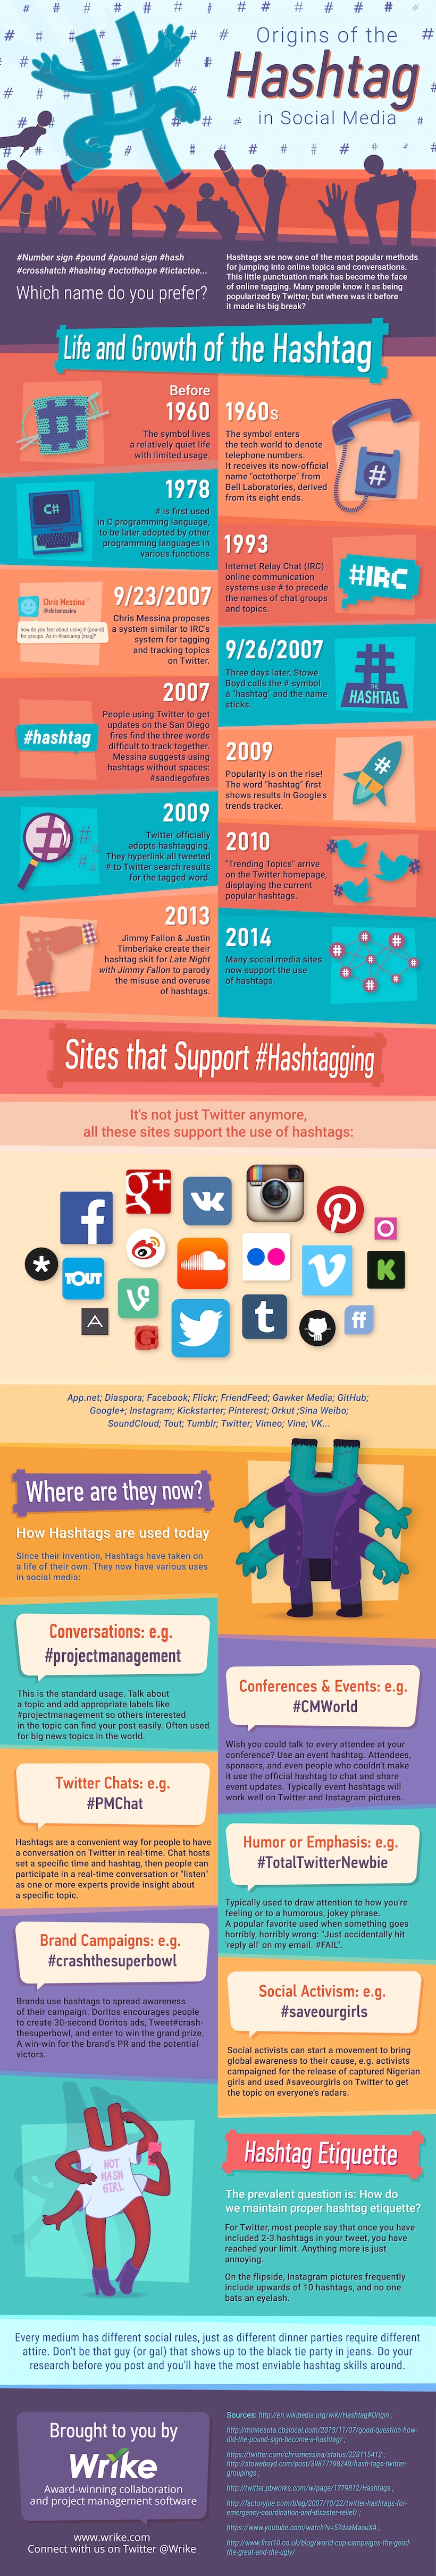 Origin of the #Hashtag in Social Media (#Infographic)